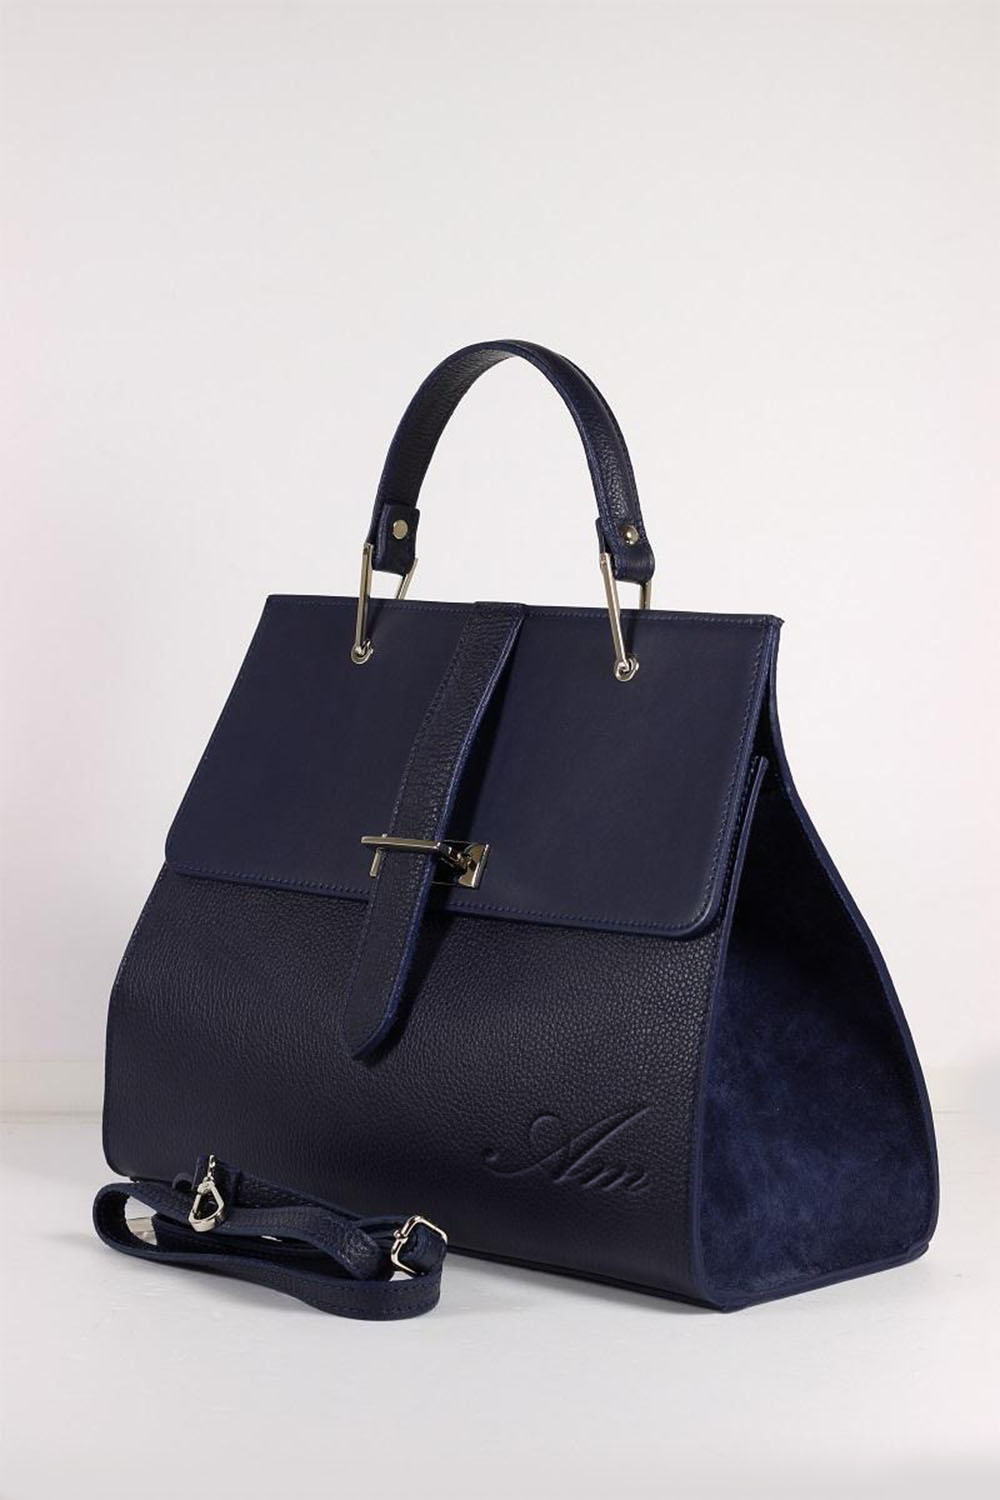 Alti Mora top luxury women handbag : Chic BB